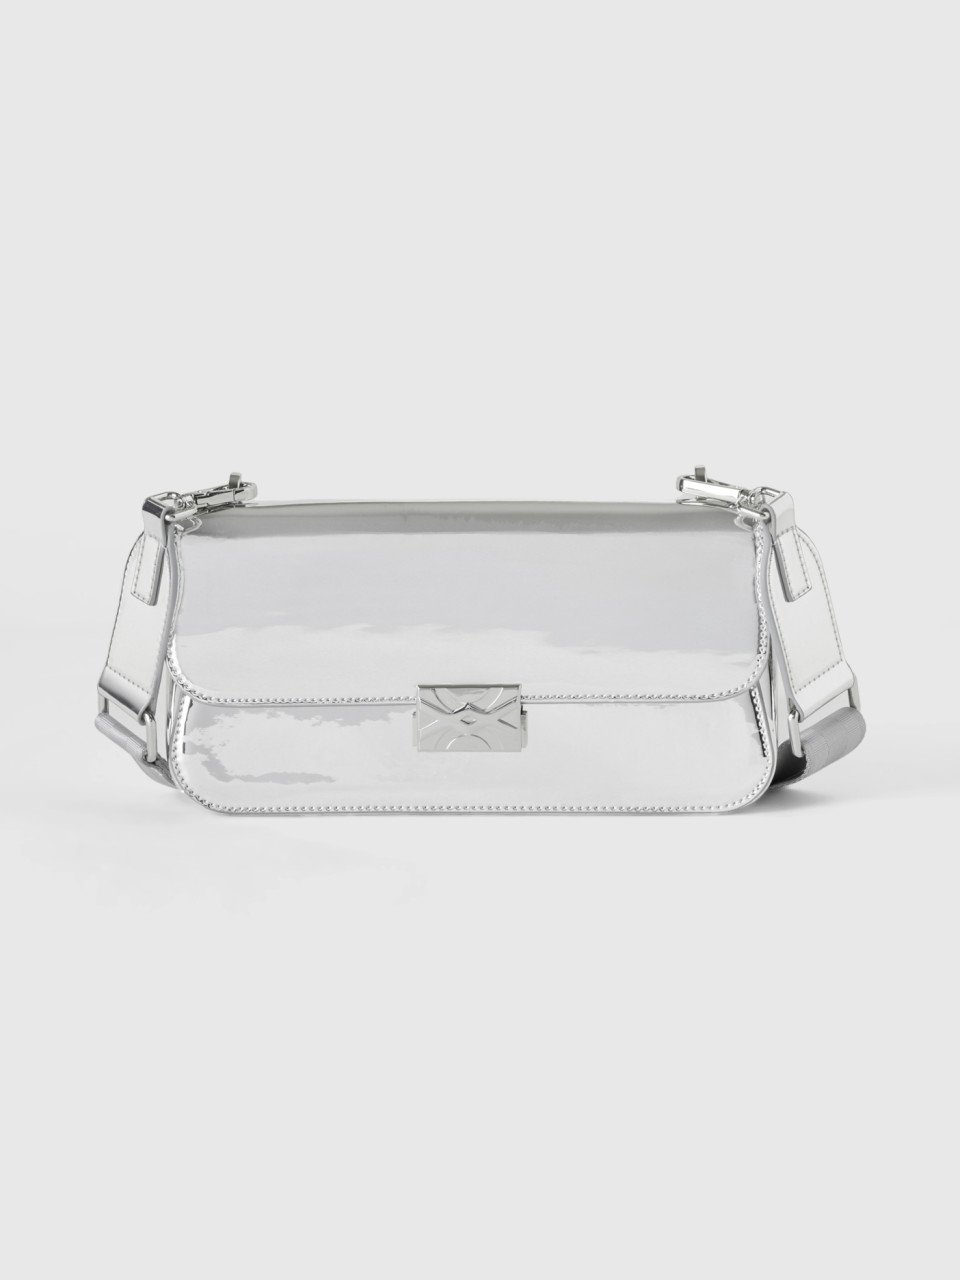 Benetton, Glossy Silver Handbag, Silver, Women